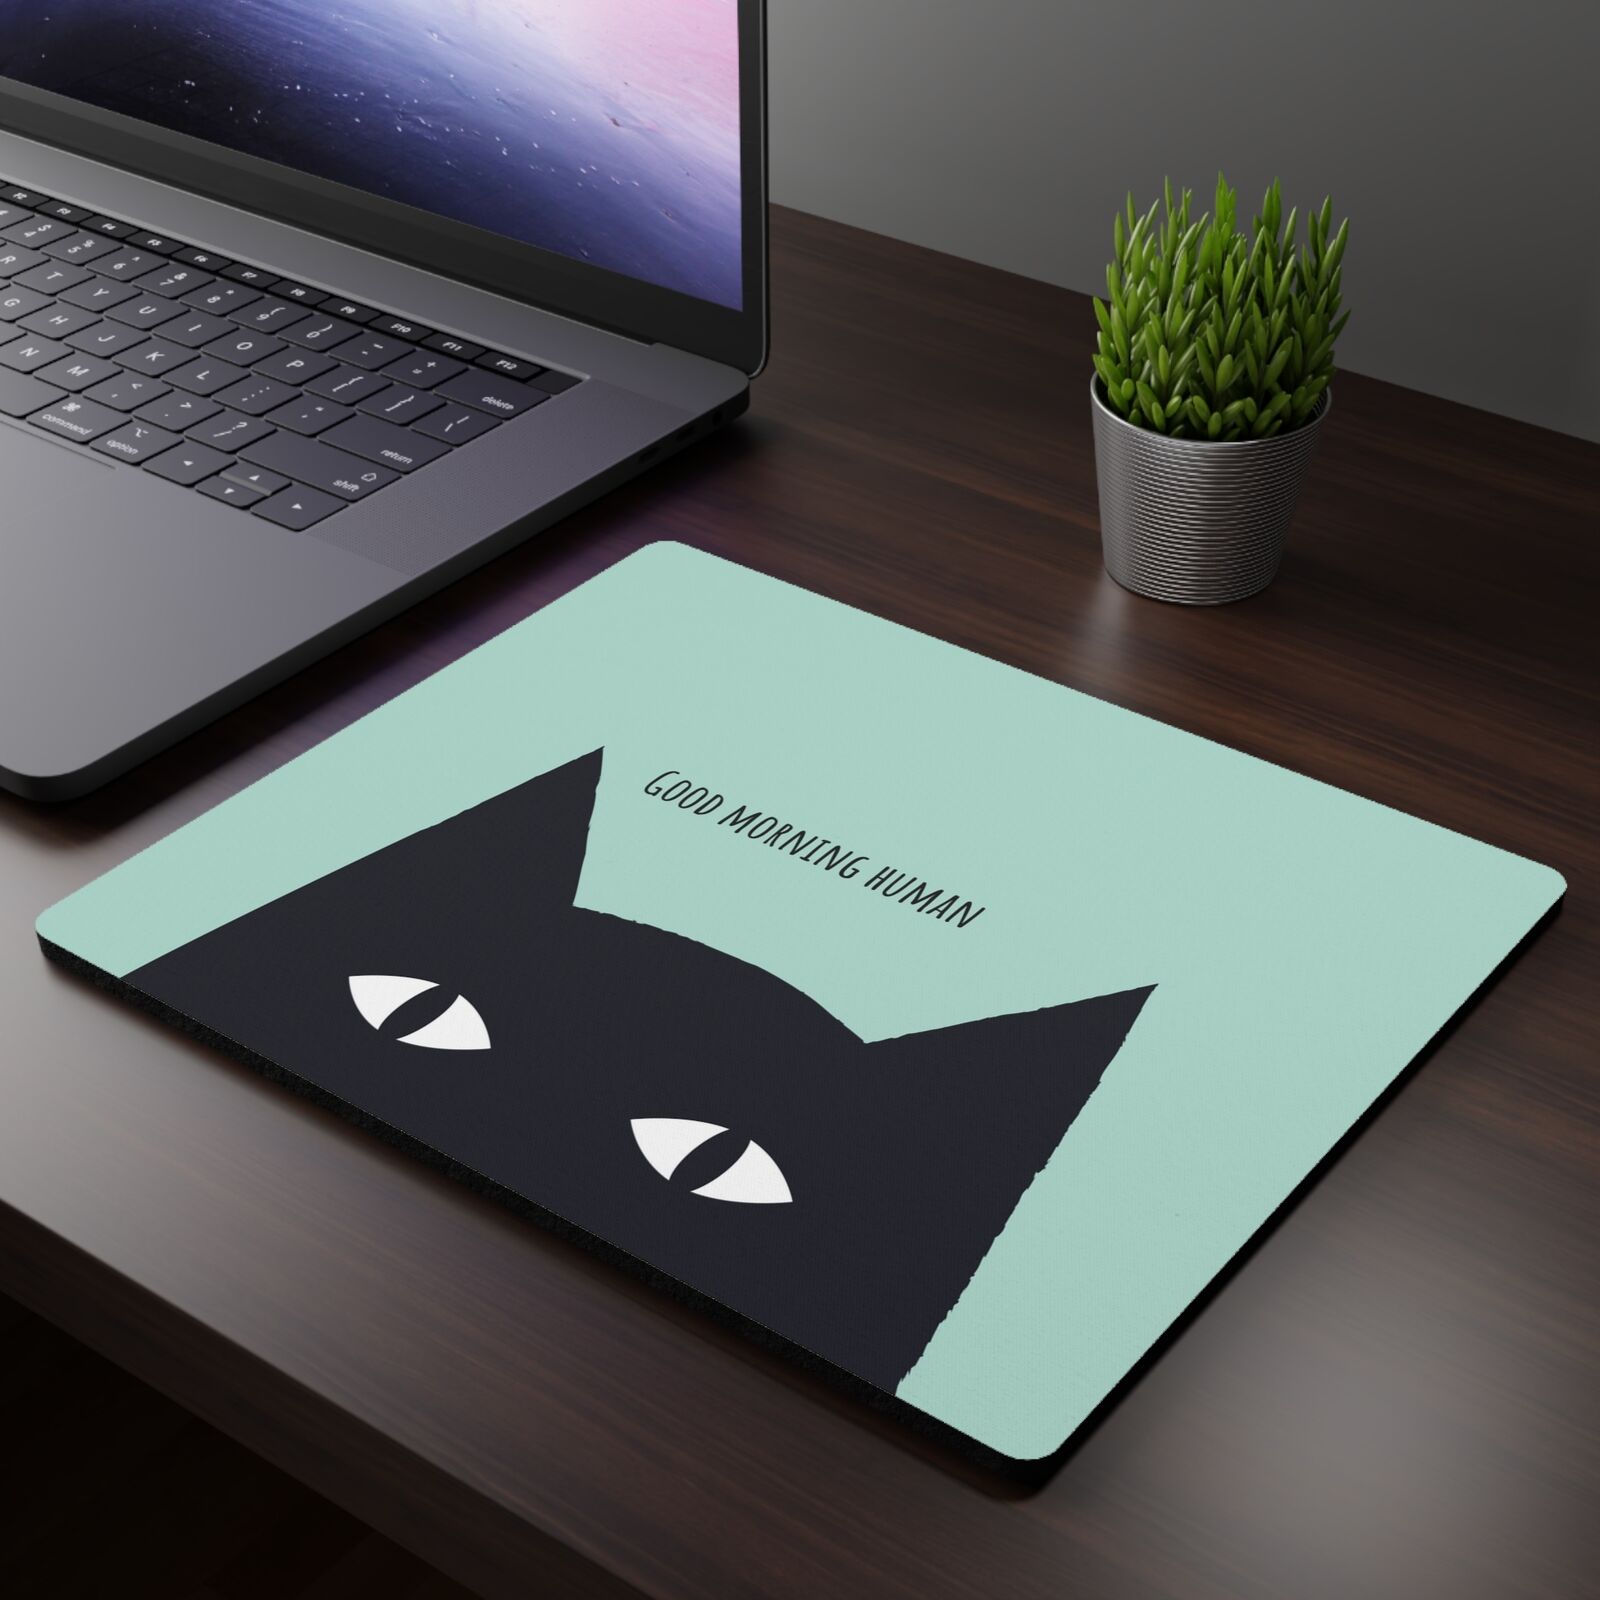 Funny Black Cat Mouse Pad, mouse pad with cat, cute mousepad kawaii cat desk mat